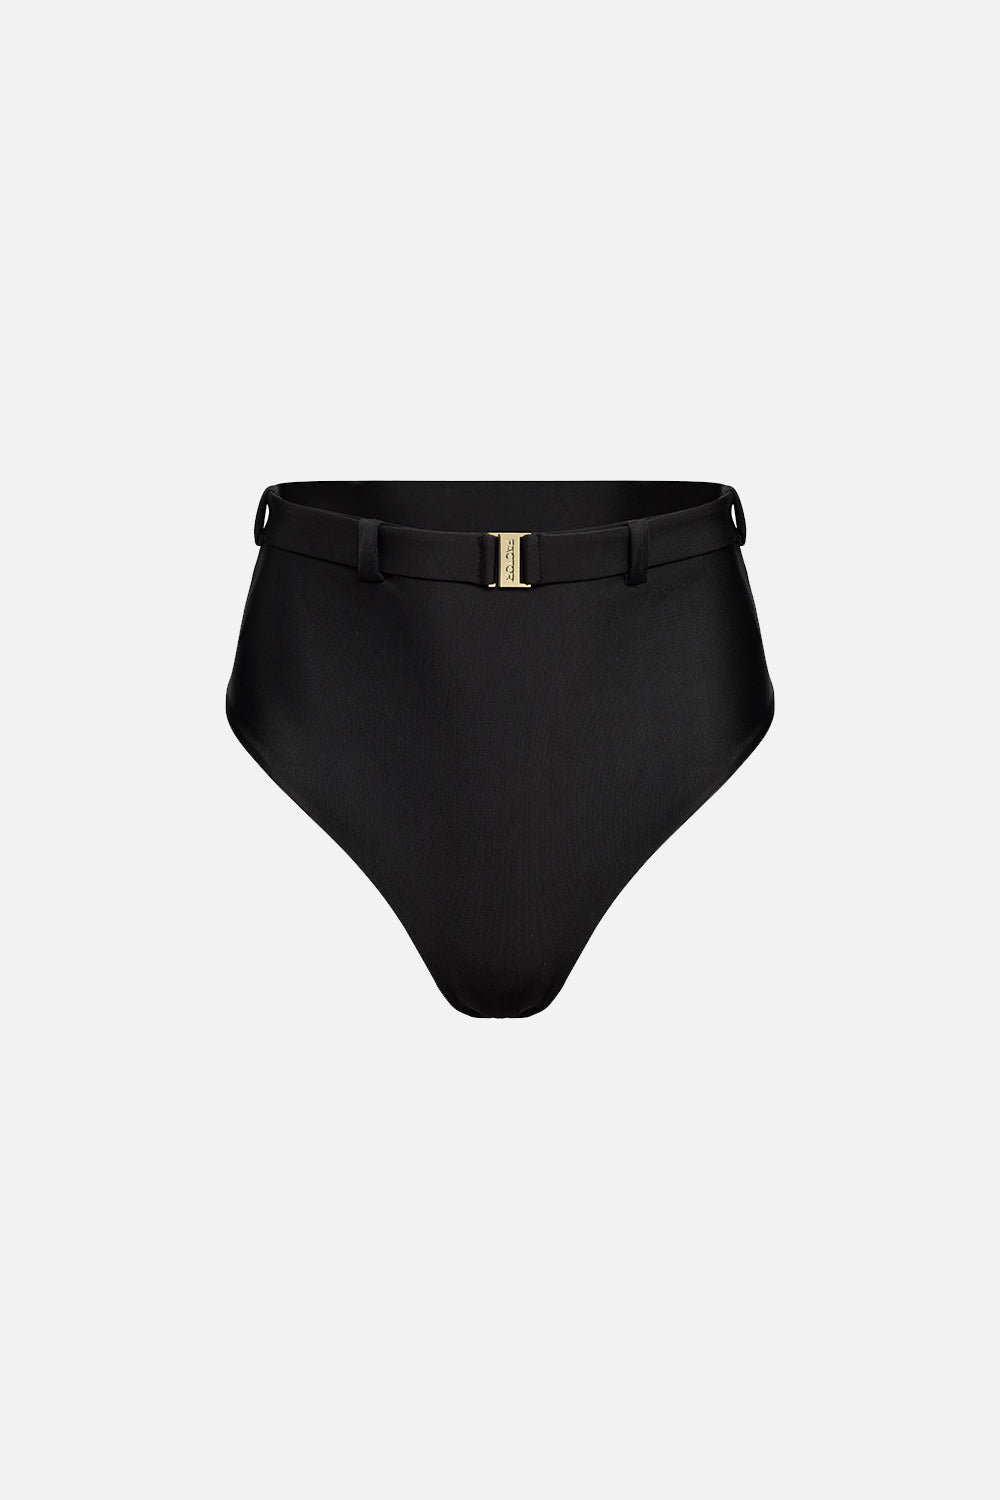 The High Waist Silhouette Bikini Bottom in Onyx